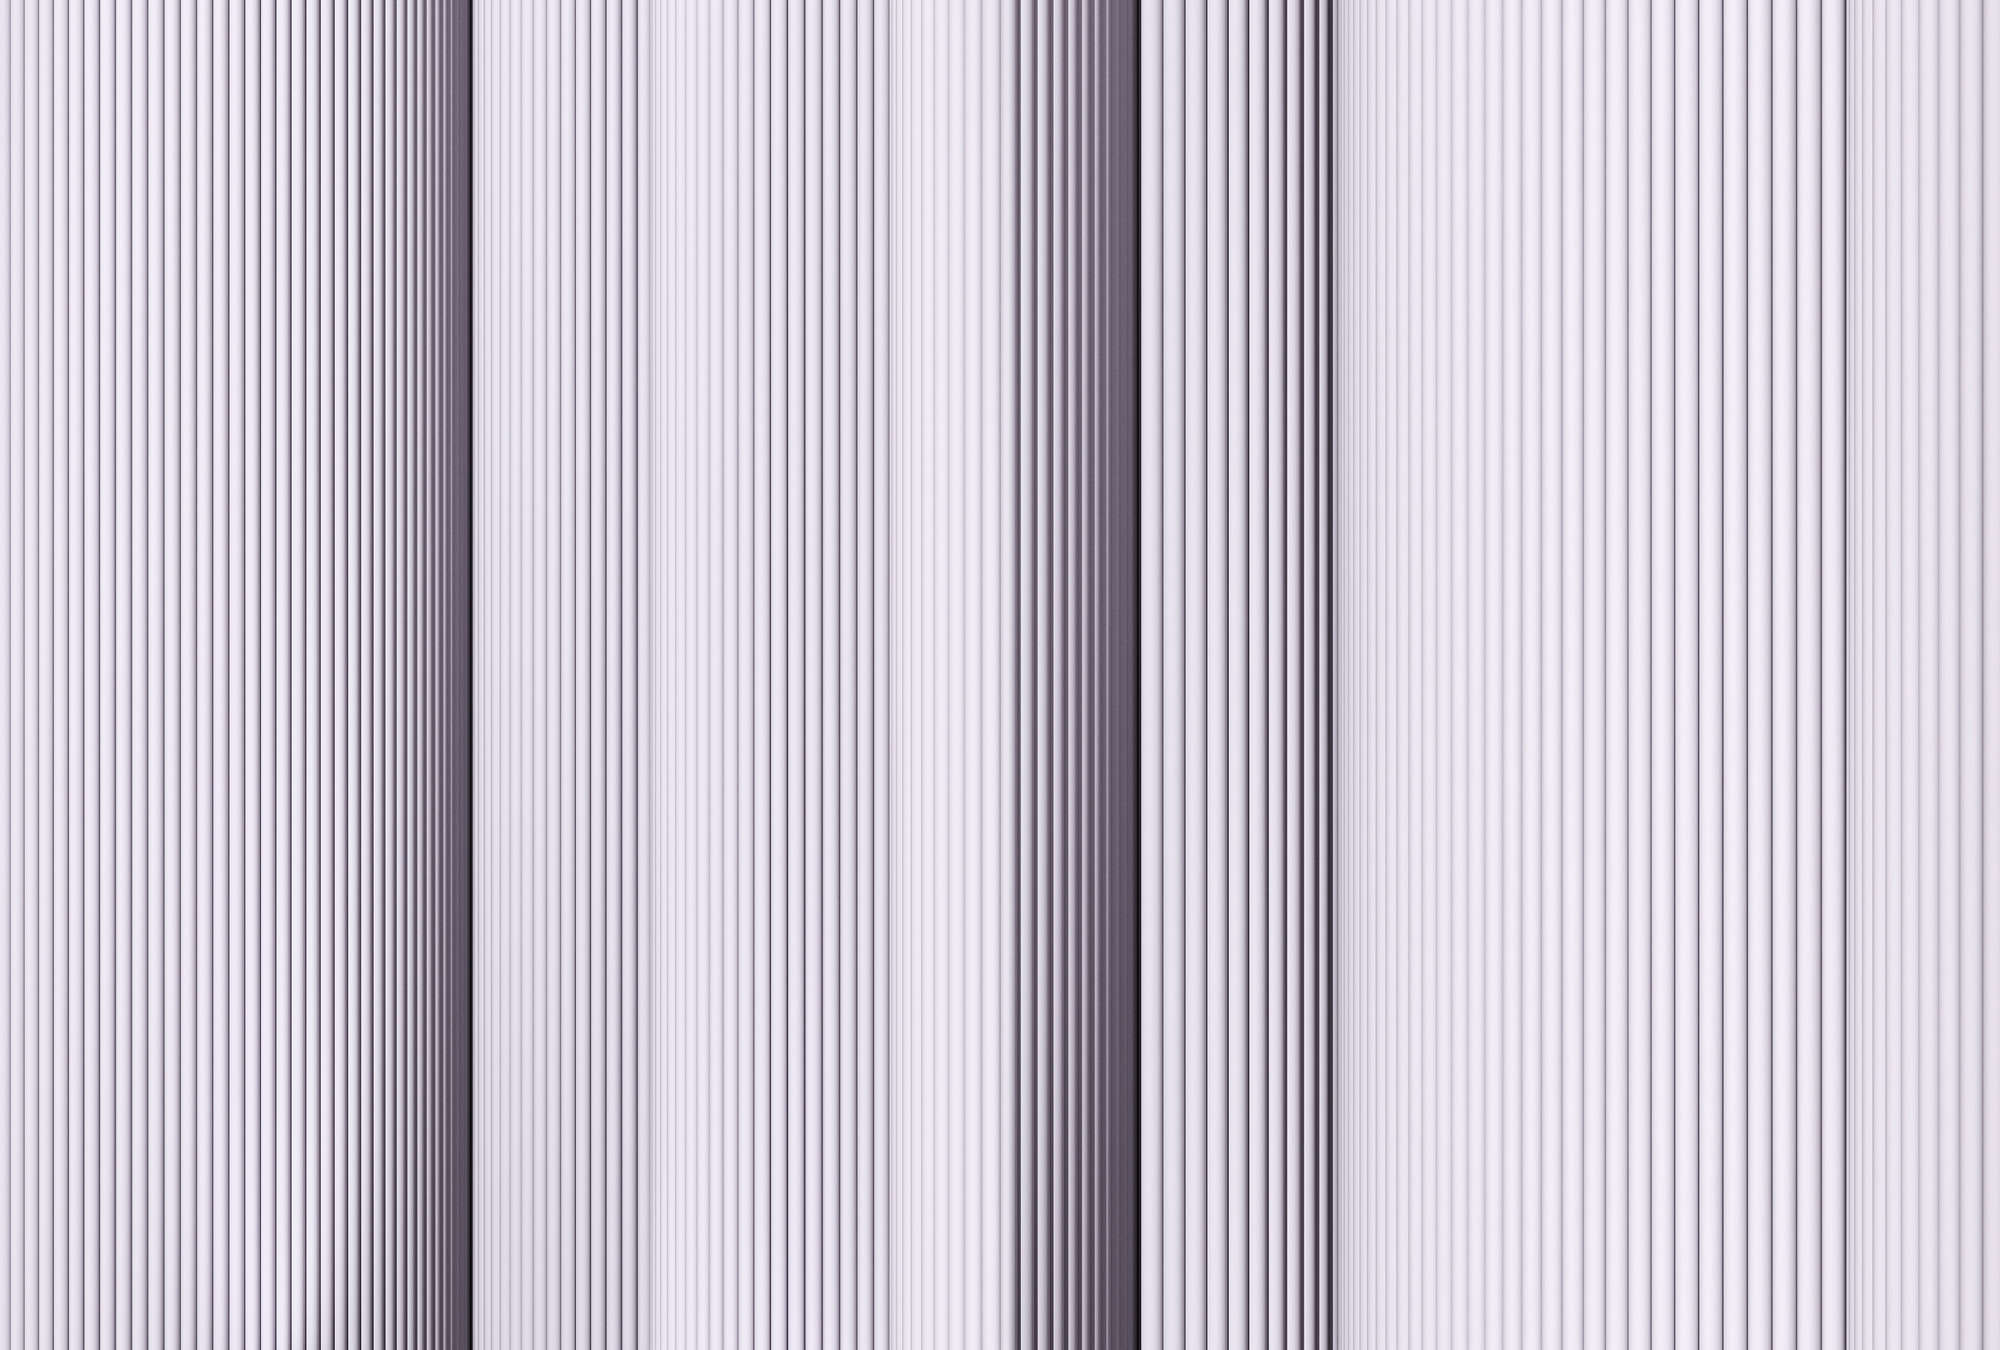             Magic Wall 1 – Streifen Fototapete 3D Illusion Effekt, Violett & Weiß
        